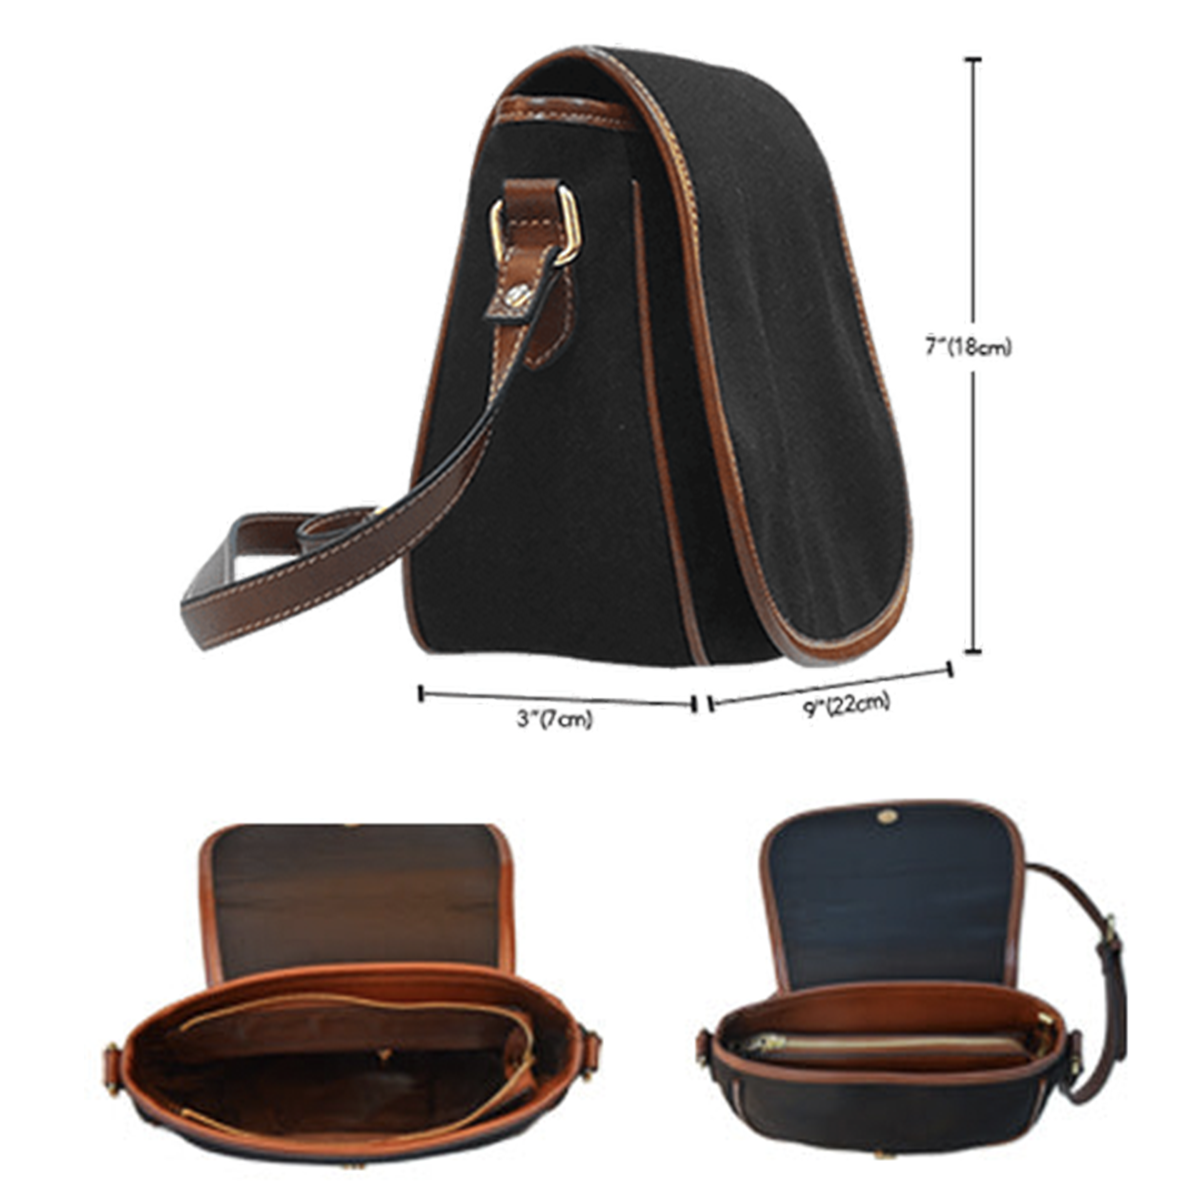 Forbes Modern Tartan Saddle Handbags